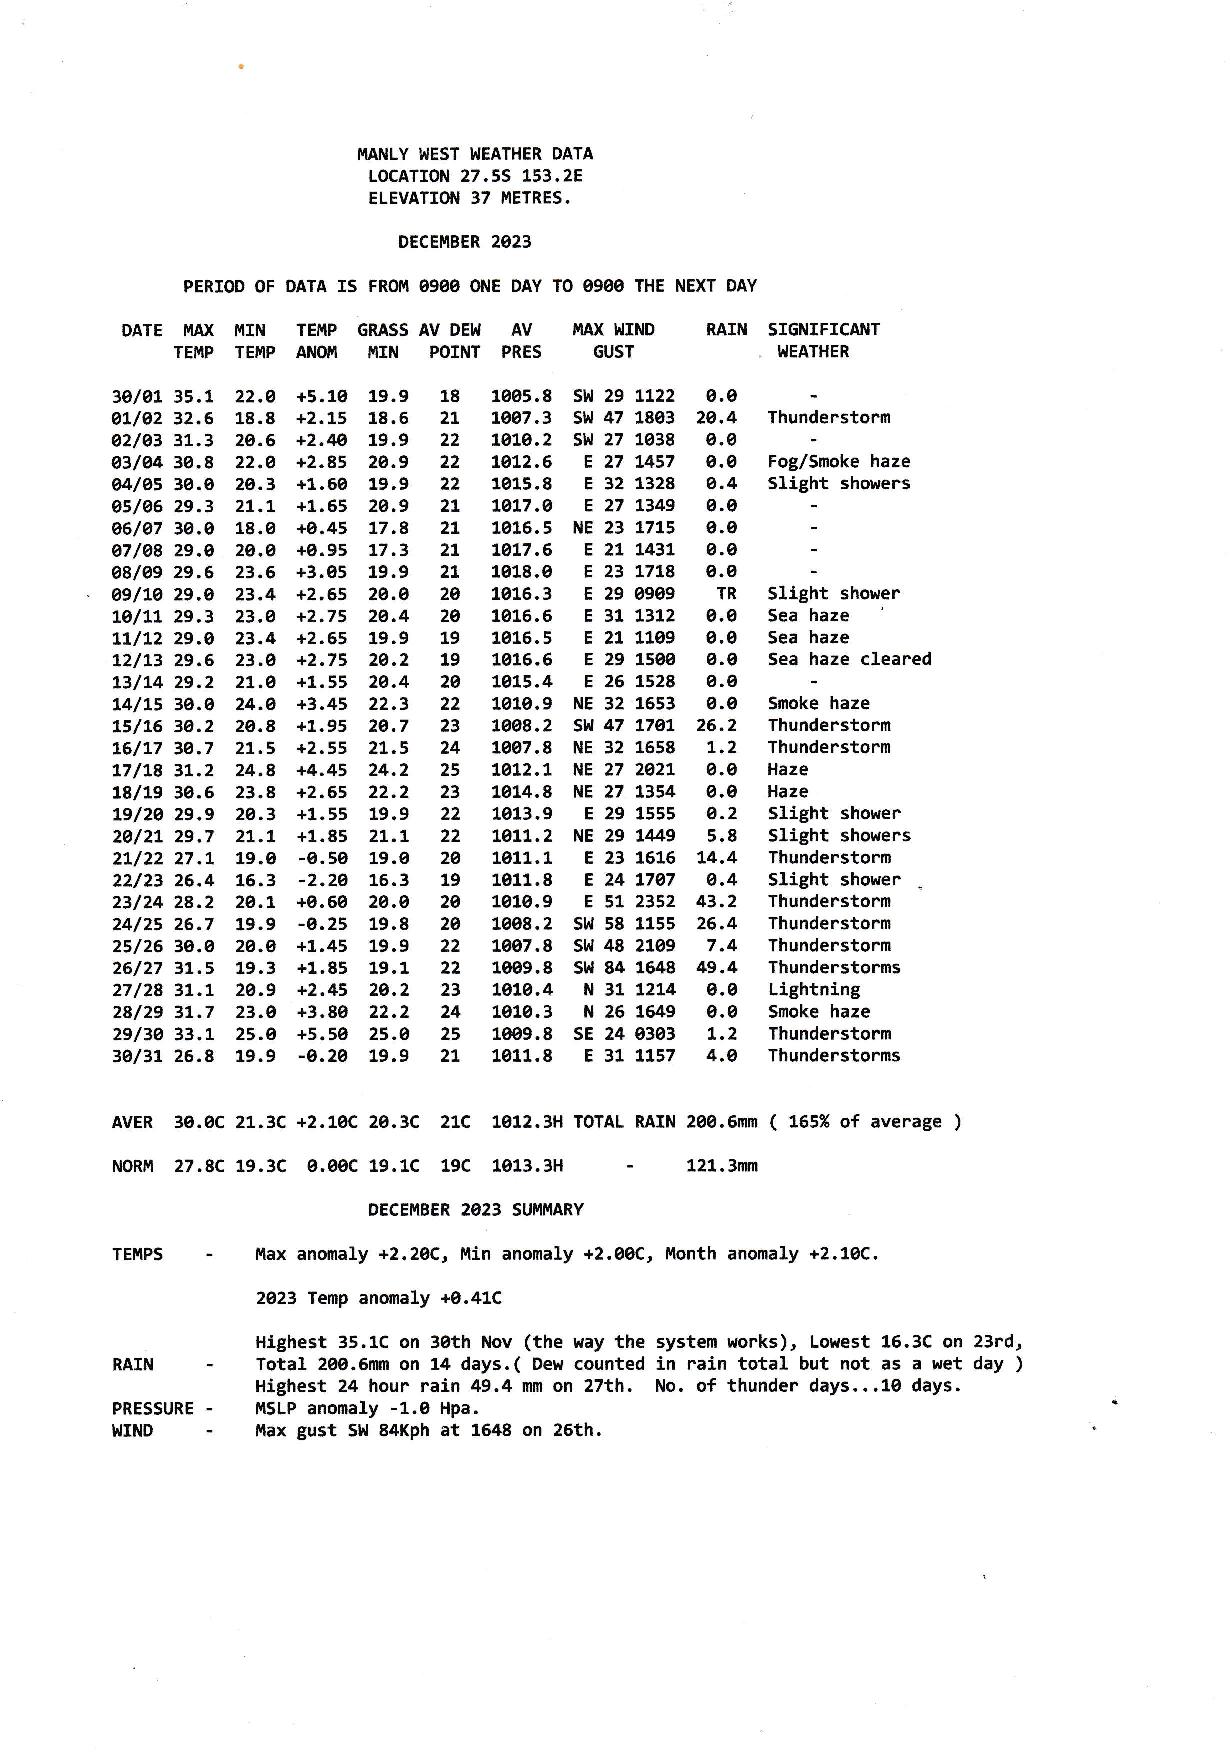 4108B - Manly West December 2023 Summary.jpg